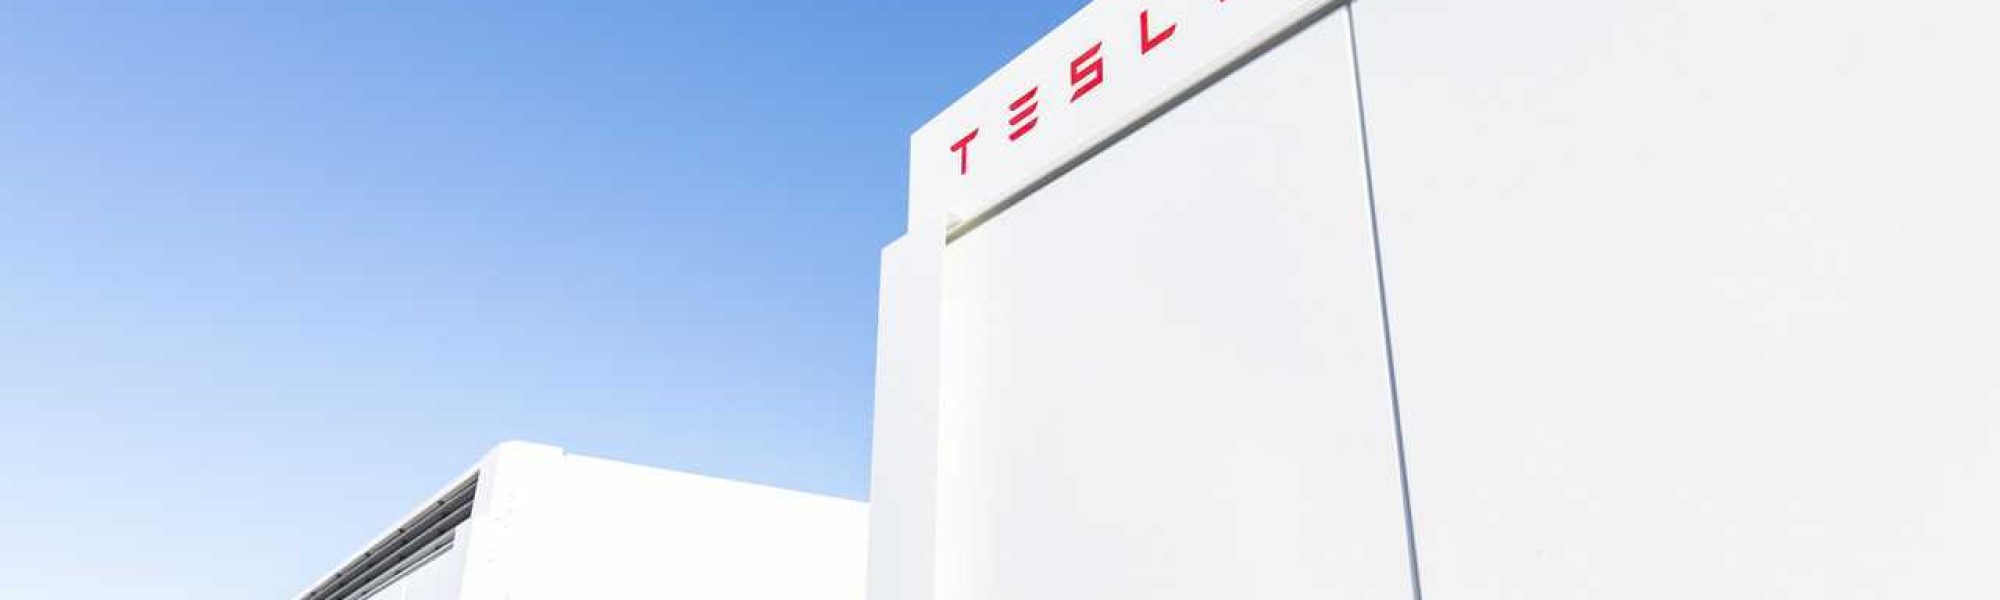 Tesla Megapacks Arrive In Hawaii, Kicking Coal To The Curb